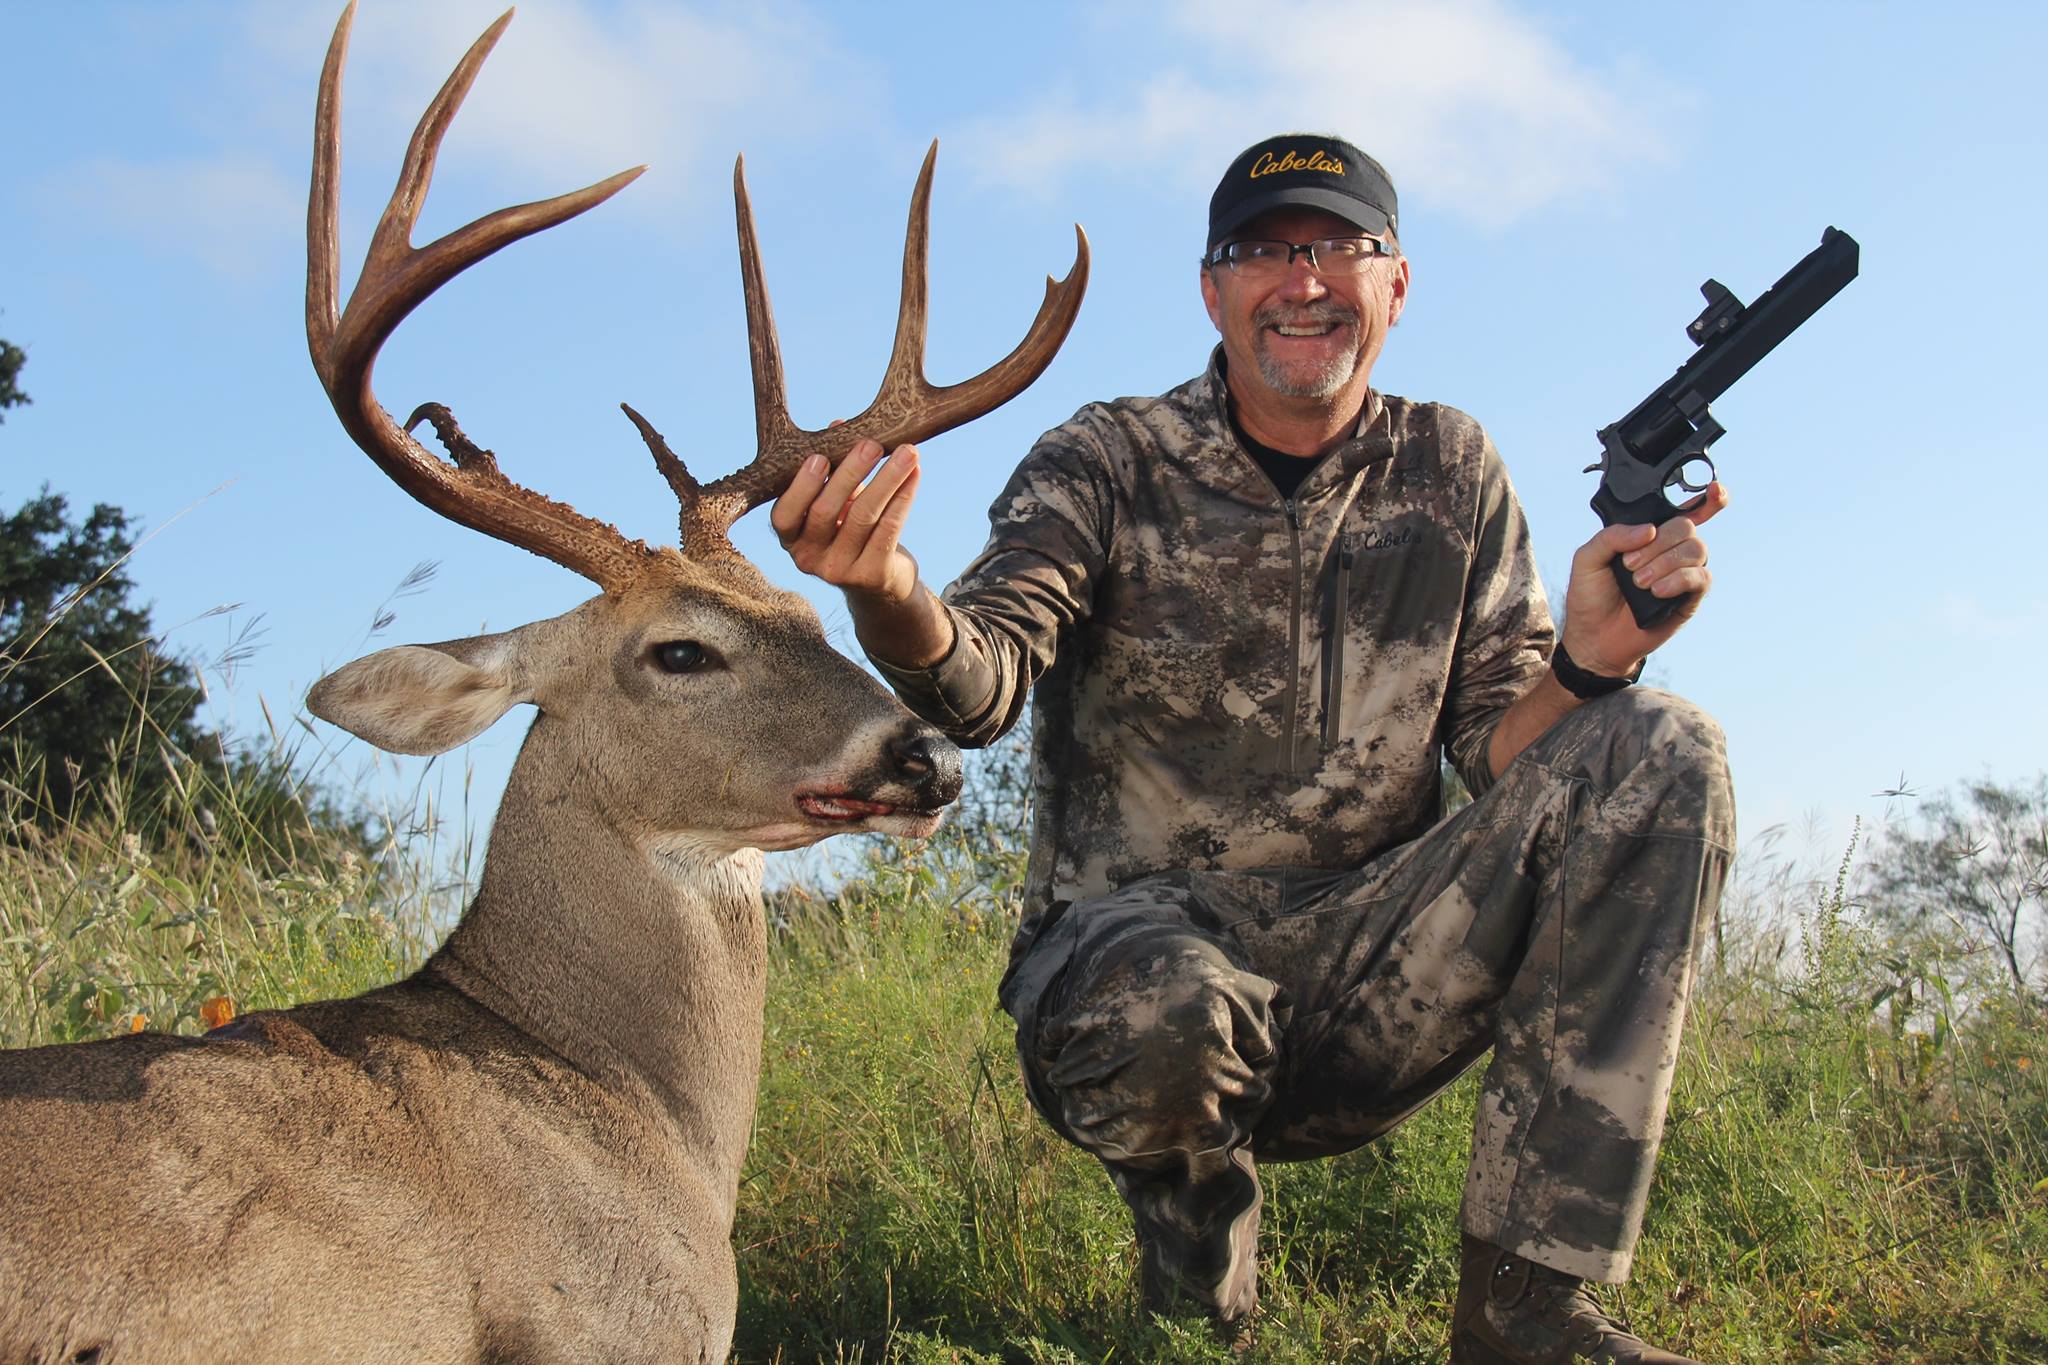 Hunting posing with deer and handgun